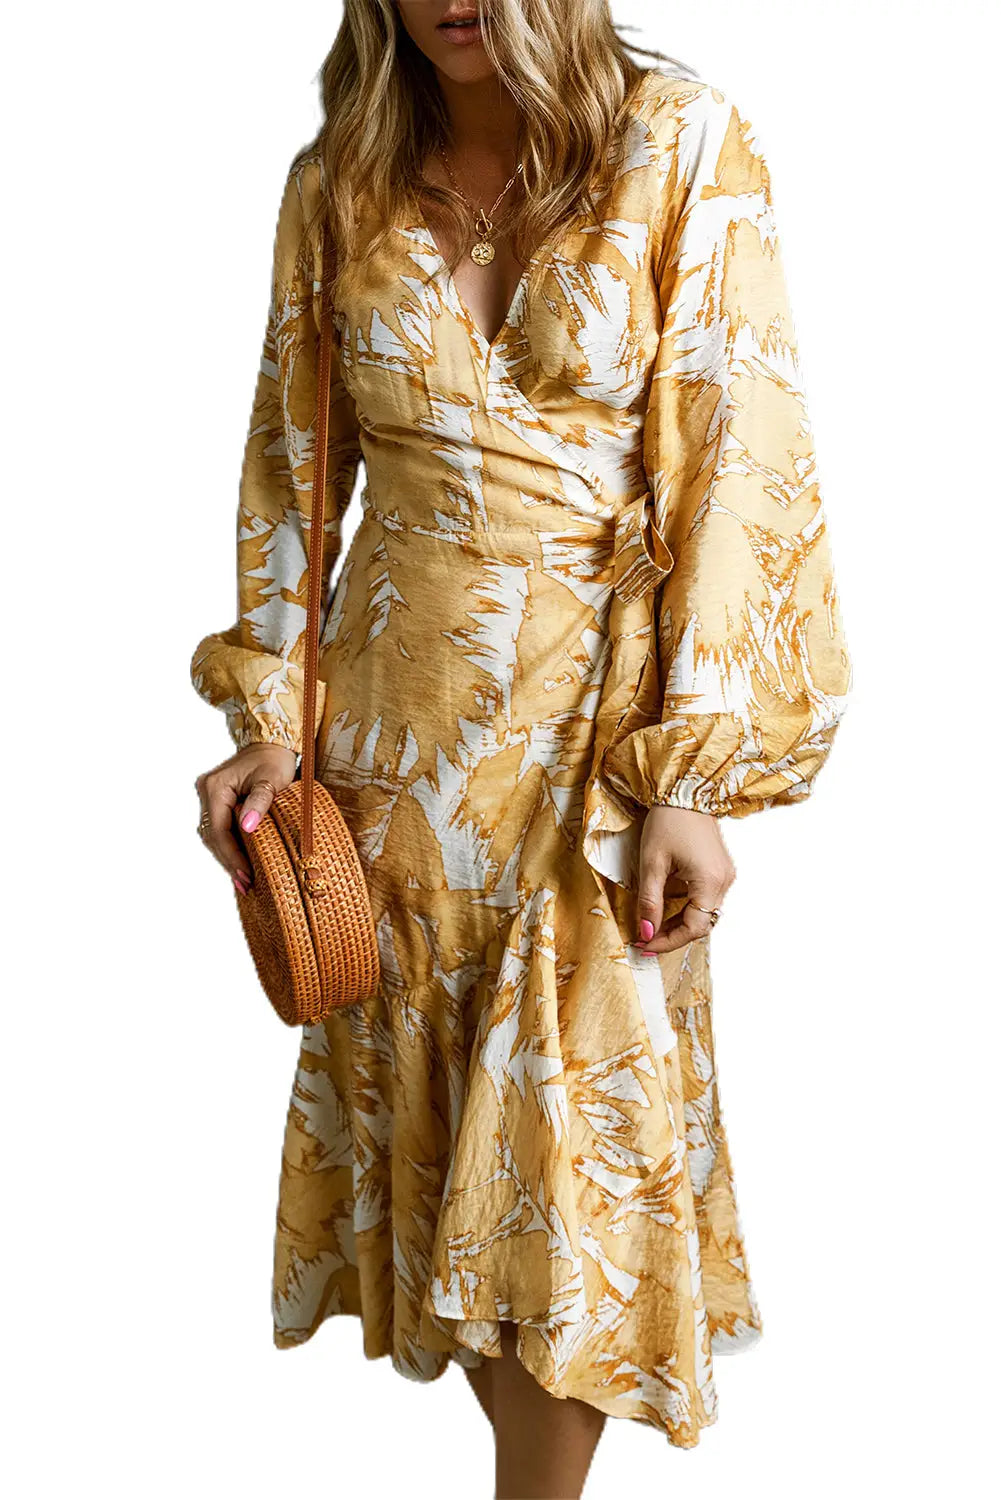 Yellow v neck wrap lace up bubble sleeve floral dress - dresses